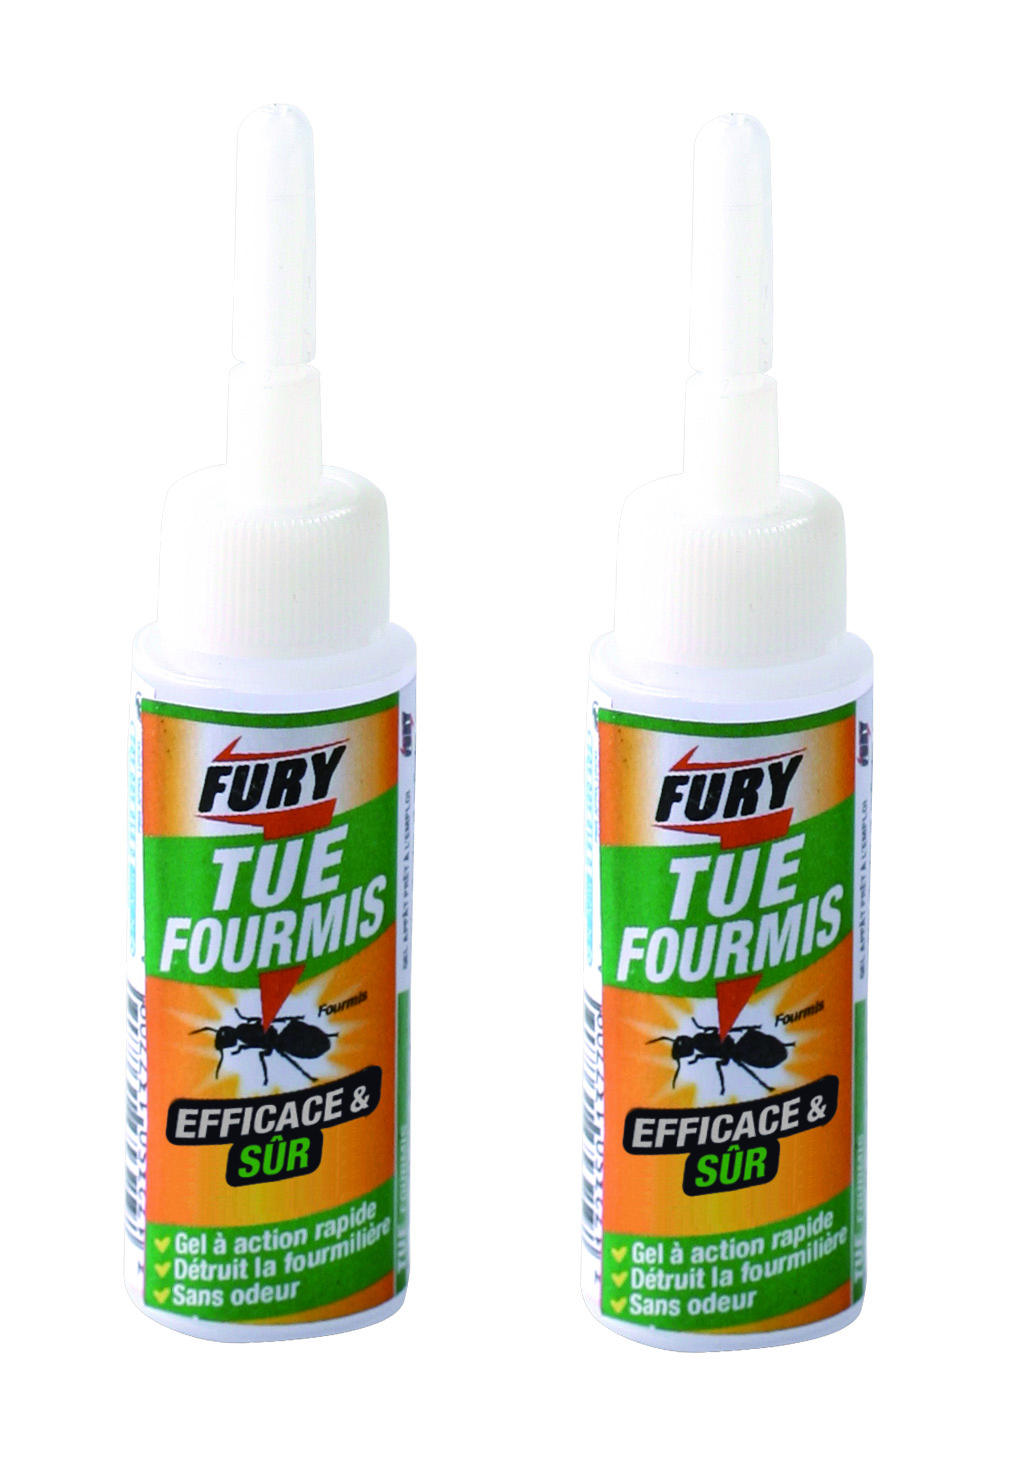 Fury tubes appâts fourmis carton 15 g